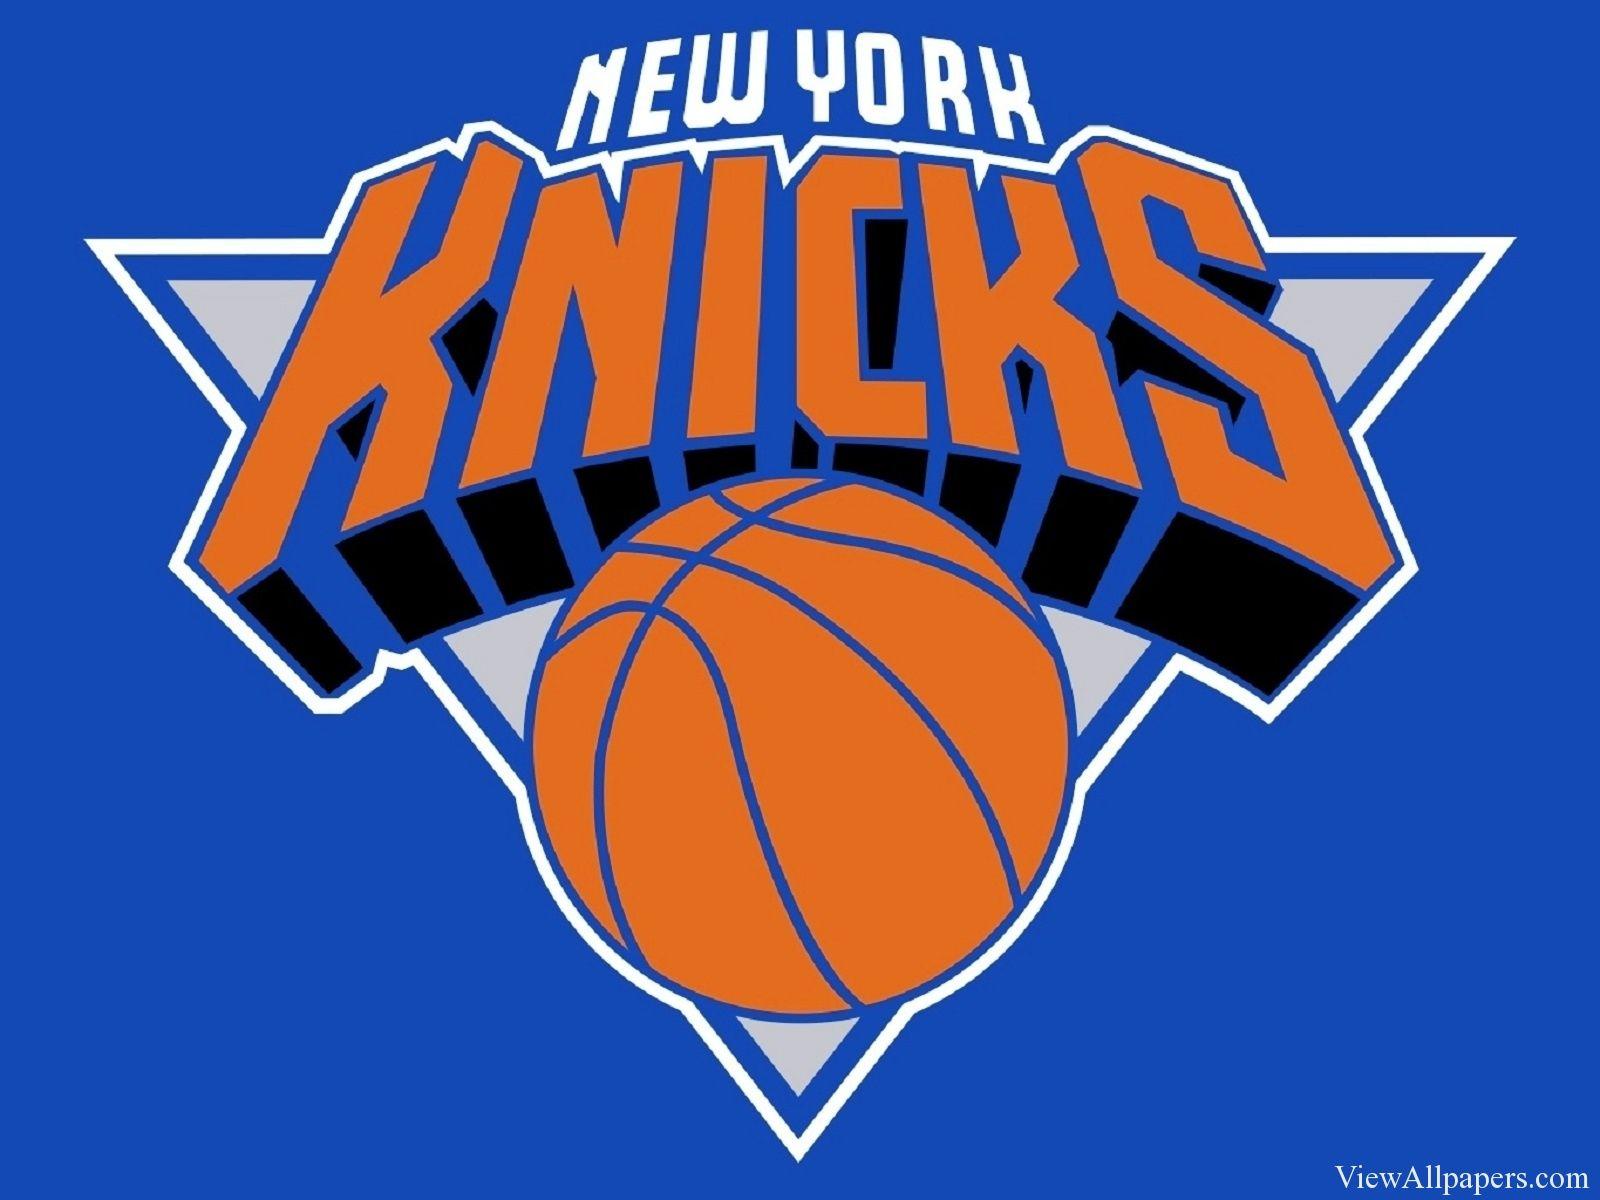 Knicks Logo - New York Knicks Logo | classic Knicks logo | New York Knicks, NBA ...